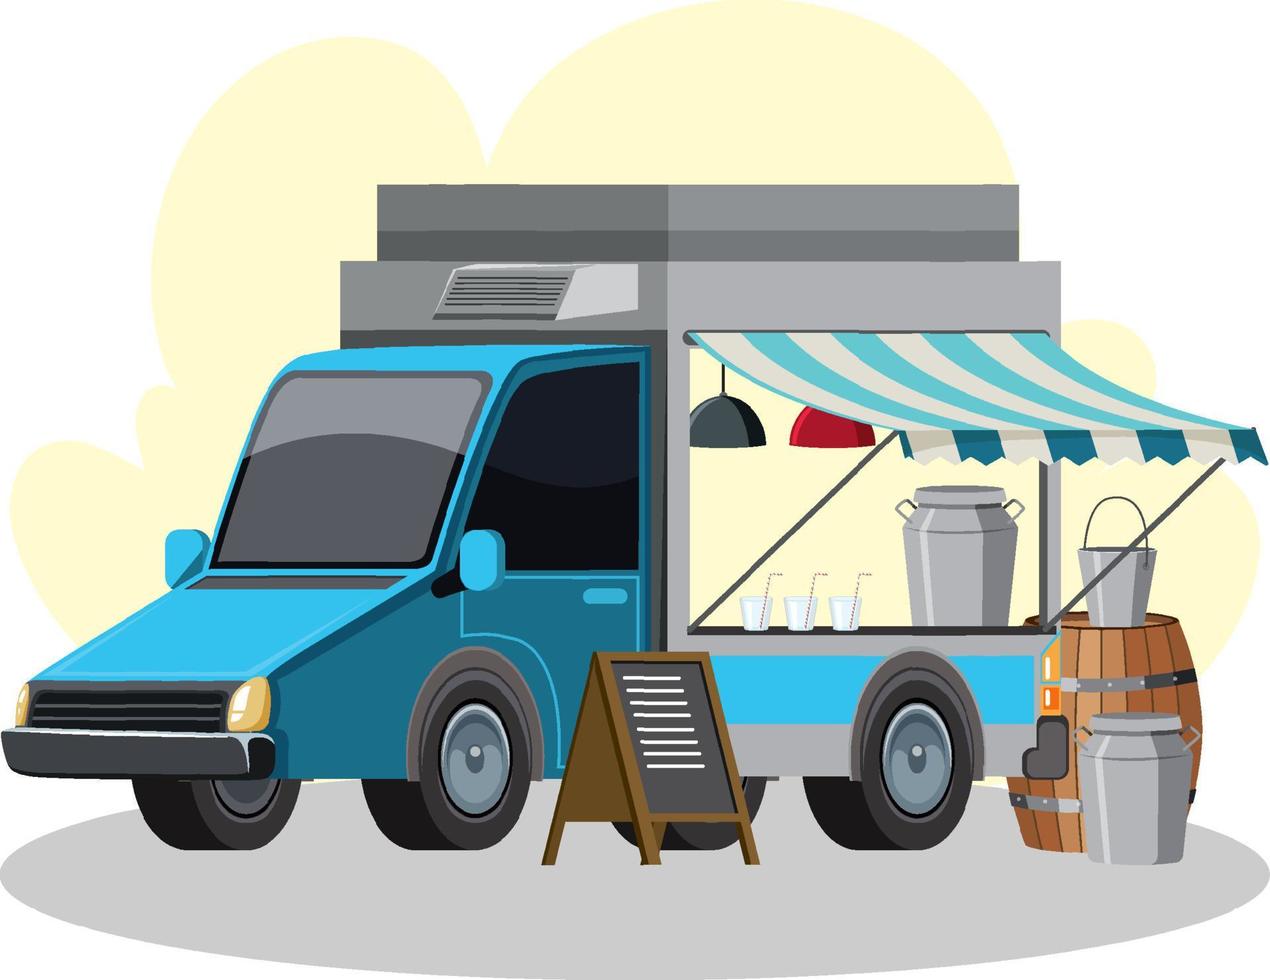 Flea market concept with a food truck vector